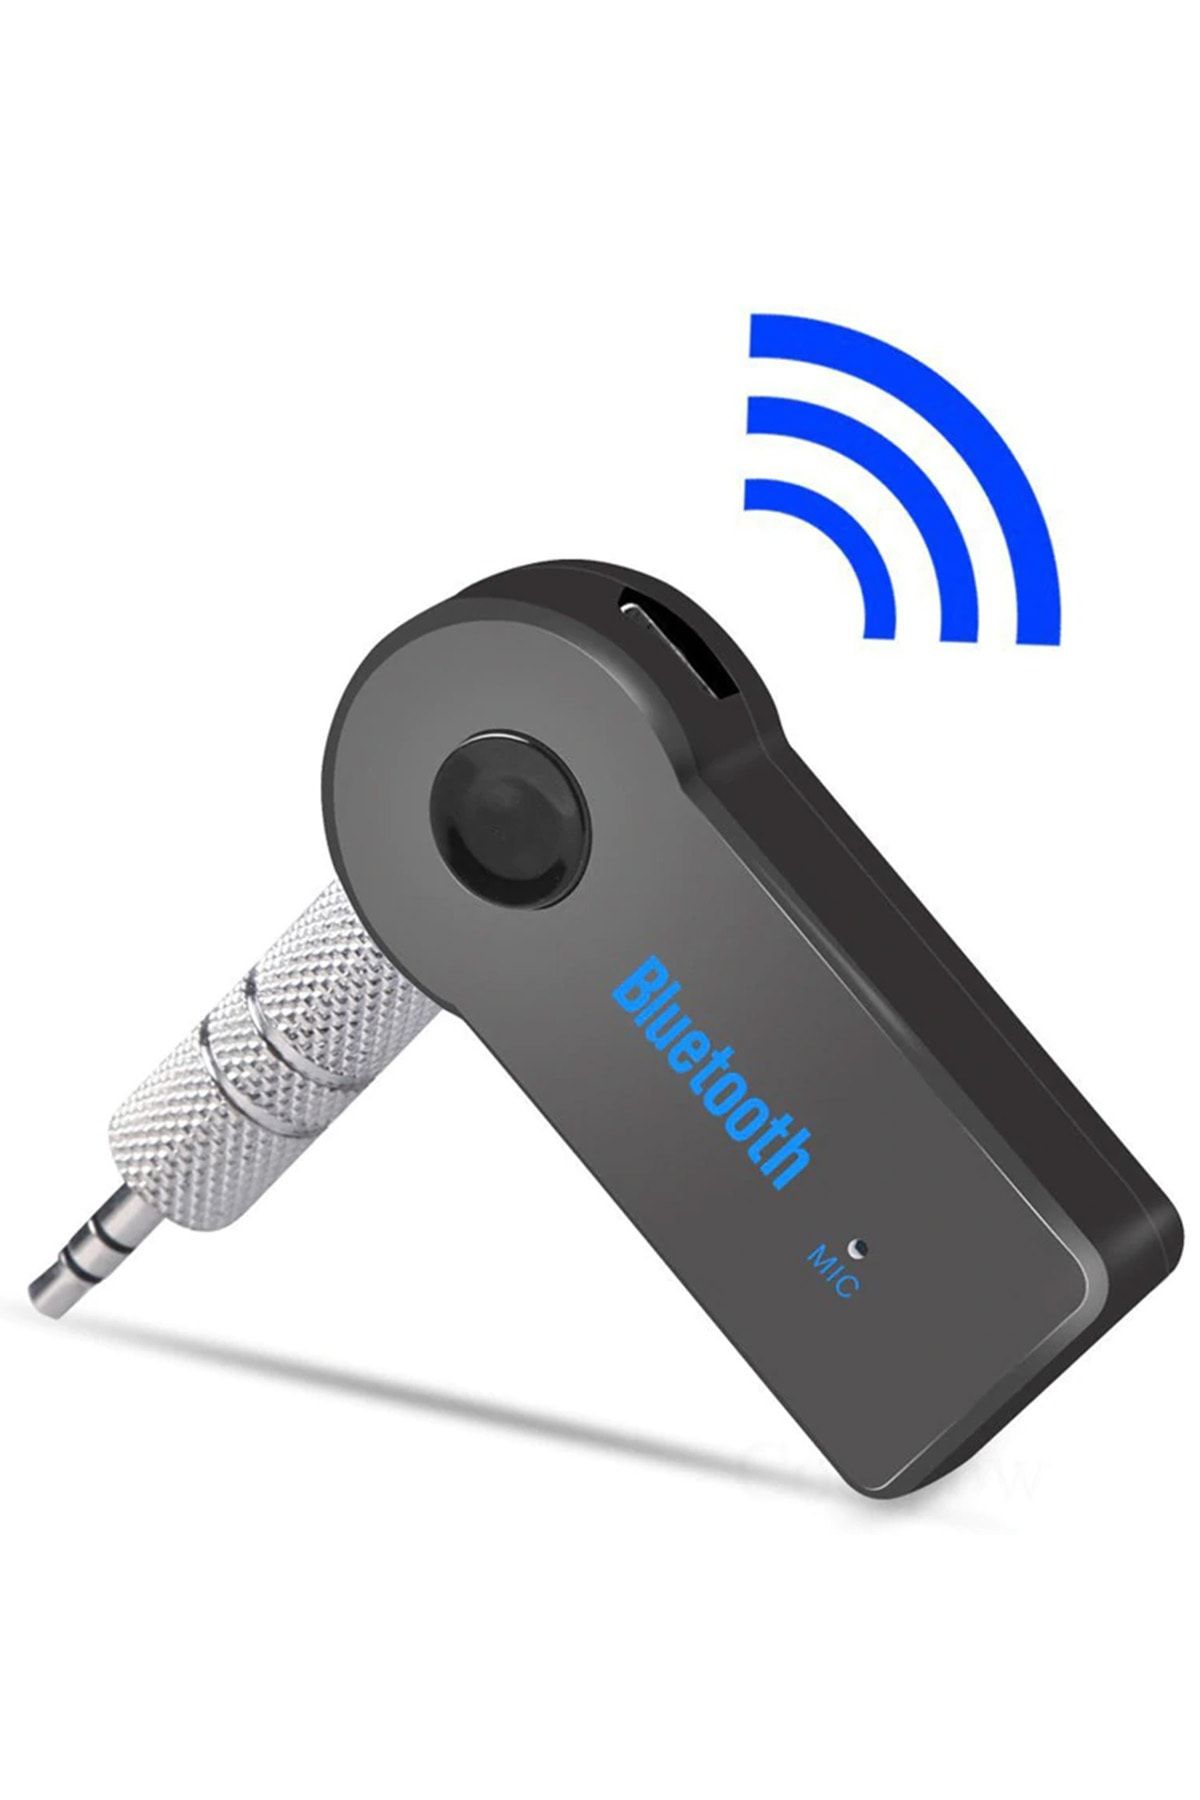 Beatitude Android Ve Ios Uyumlu Aux Araç Kiti Bluetooth Radyo Teyp Sistemi Araba Kablosuz Bağlantı Cihazı